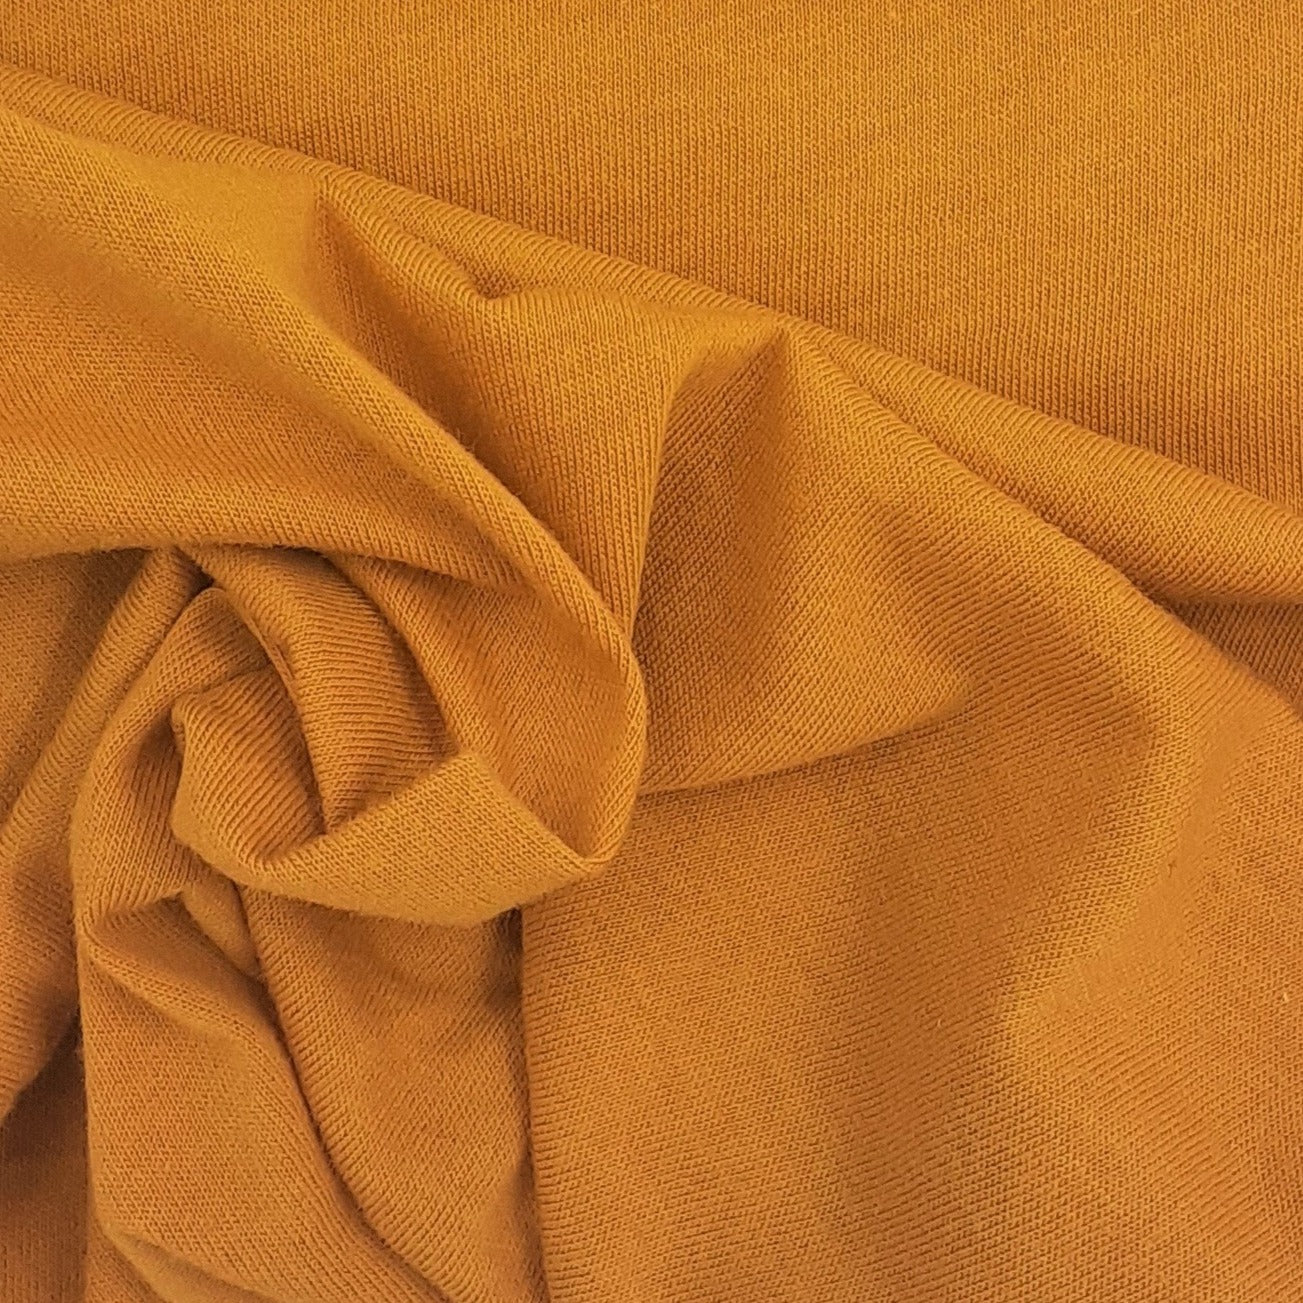 Sunflower #S204 100% Cotton 8 Ounce Jersey Knit Fabric - SKU 6882